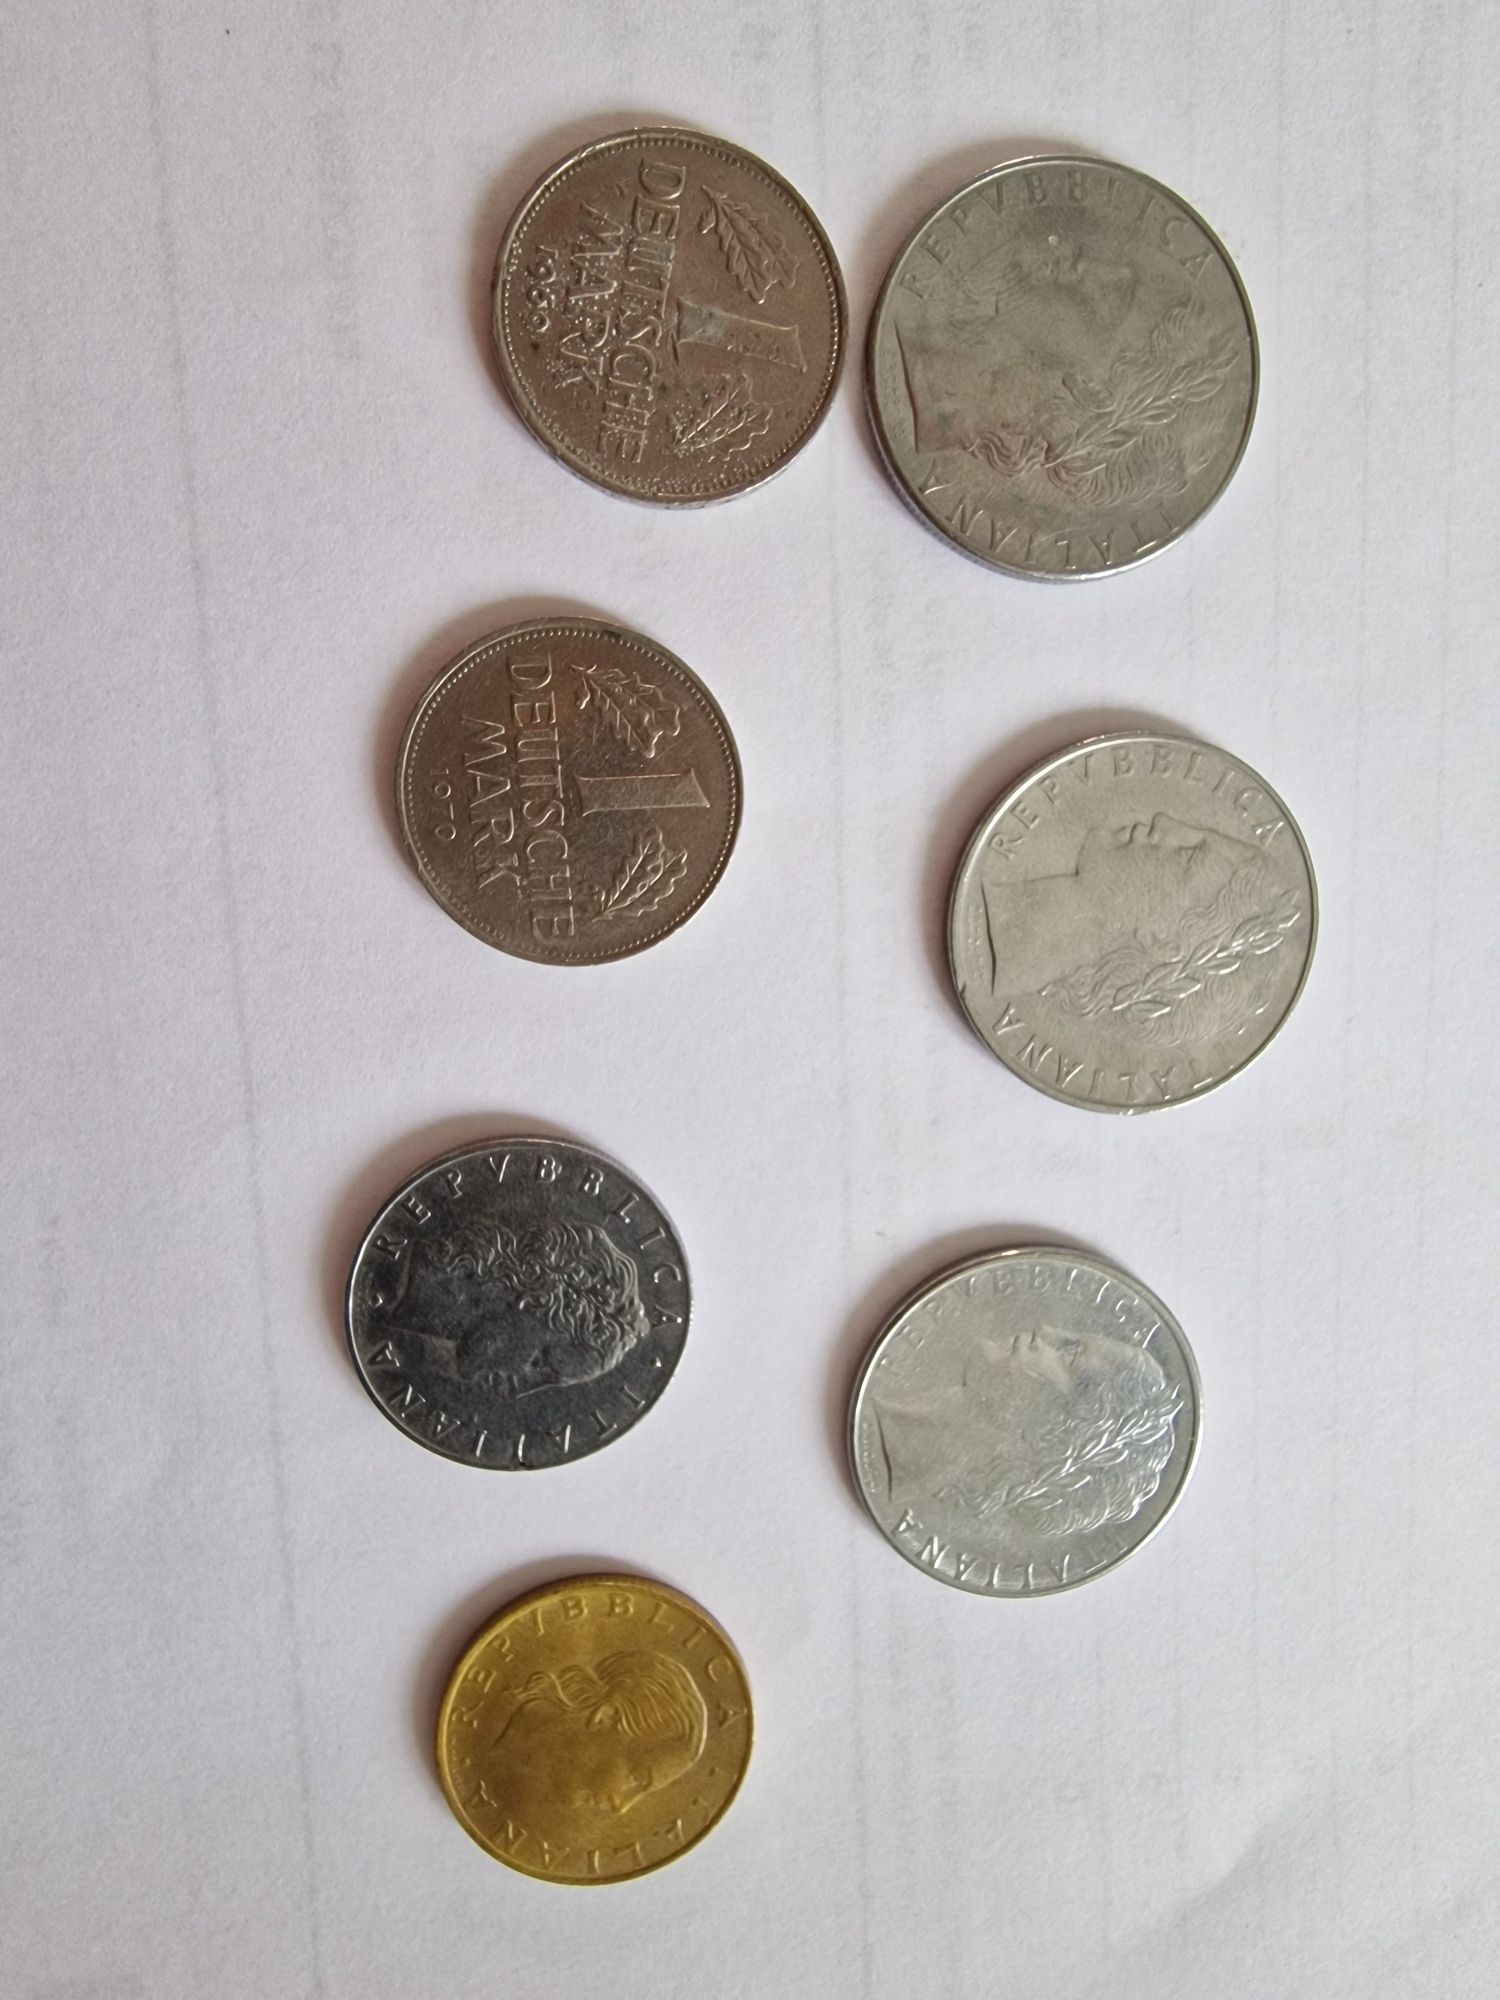 Monede Deutsche Mark 1969,1970,50 lire italiene1950,100 lire1974,1978